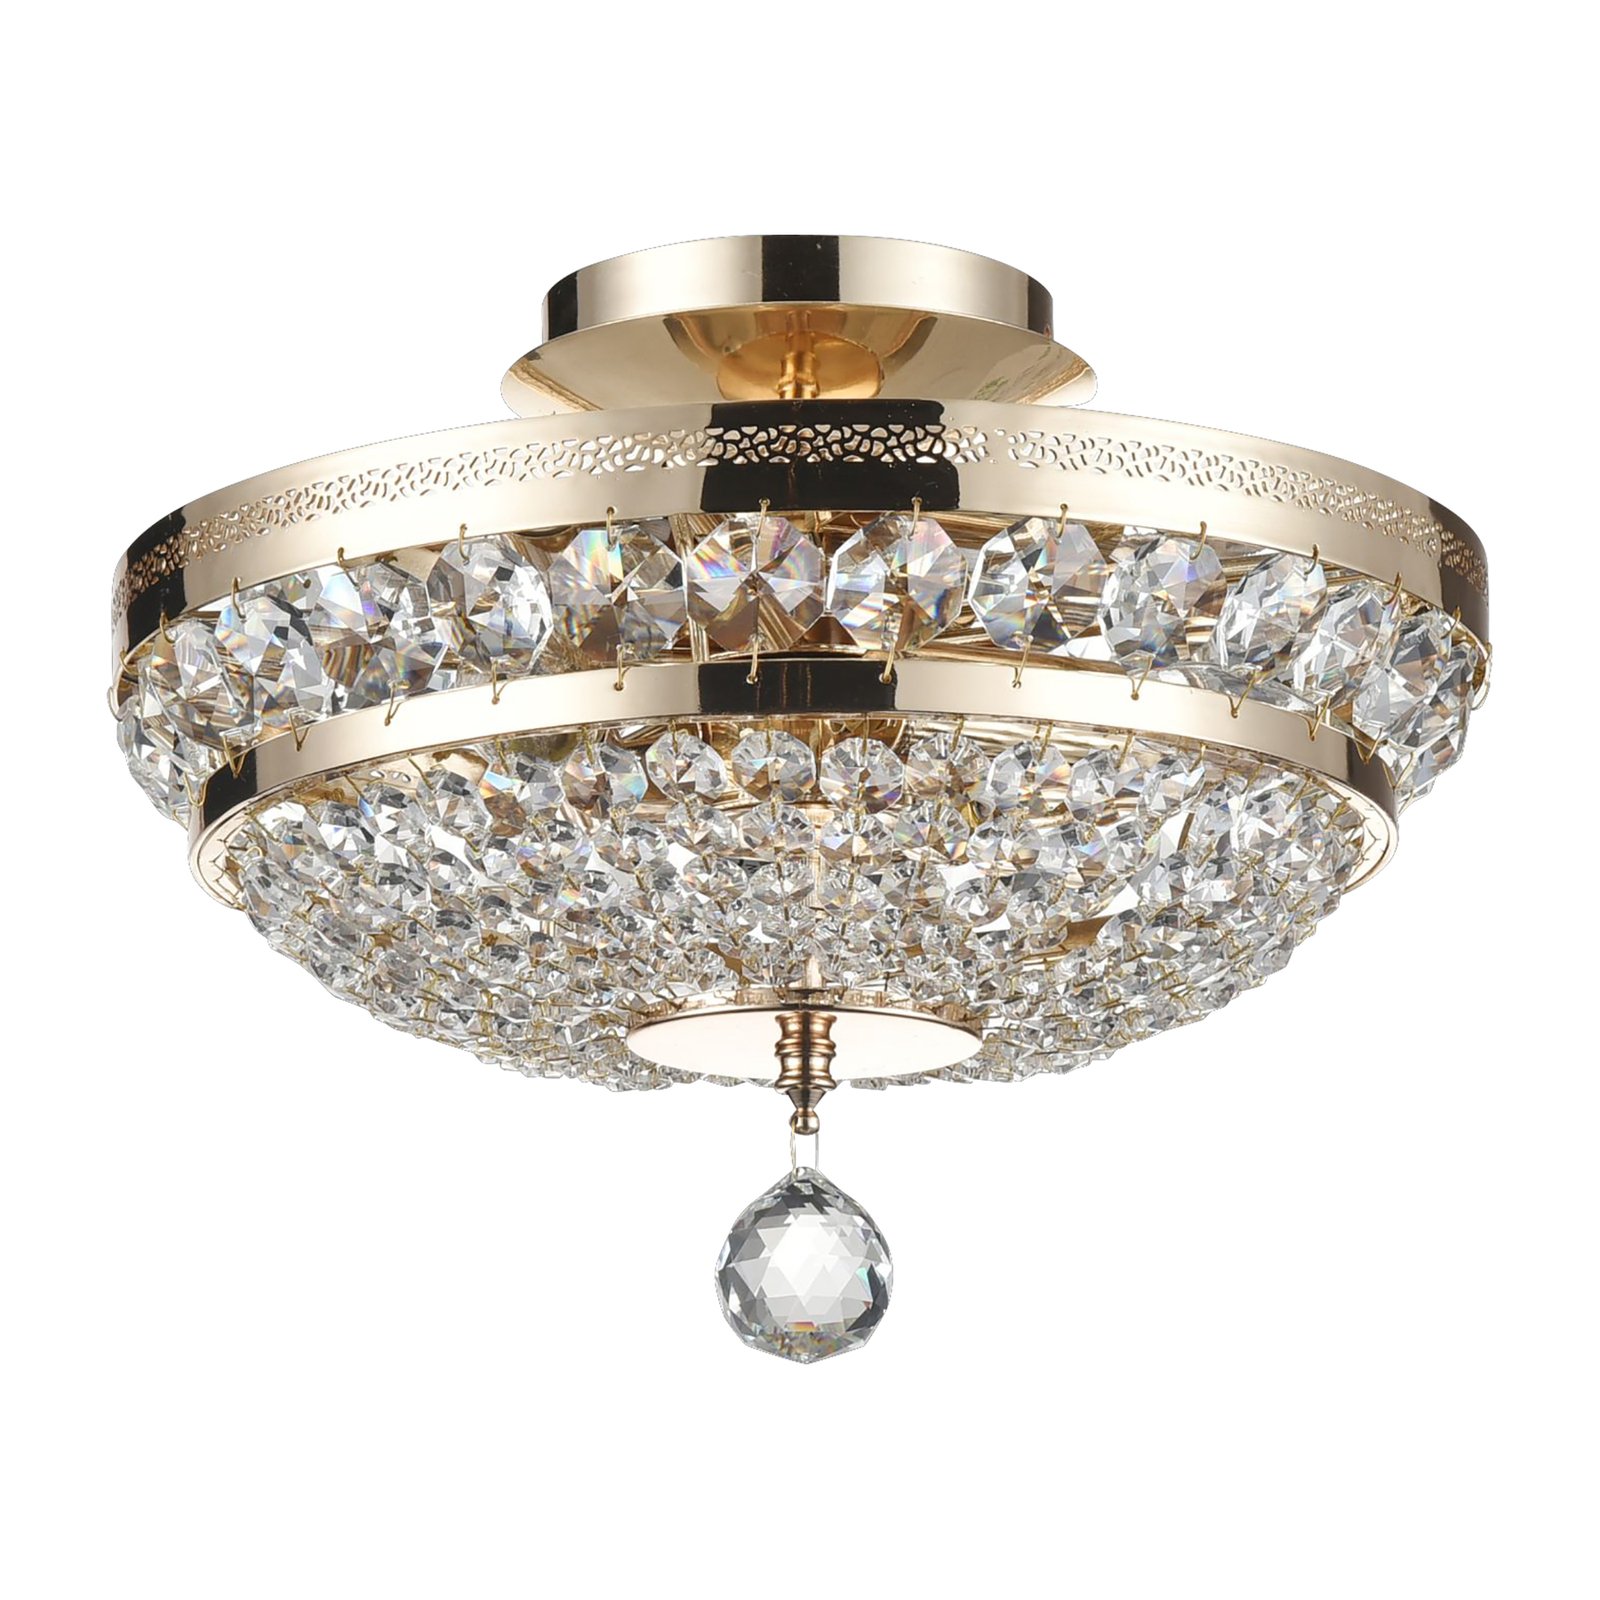 Maytoni Ottilia lampa sufitowa, kryształy, Ø 32 cm